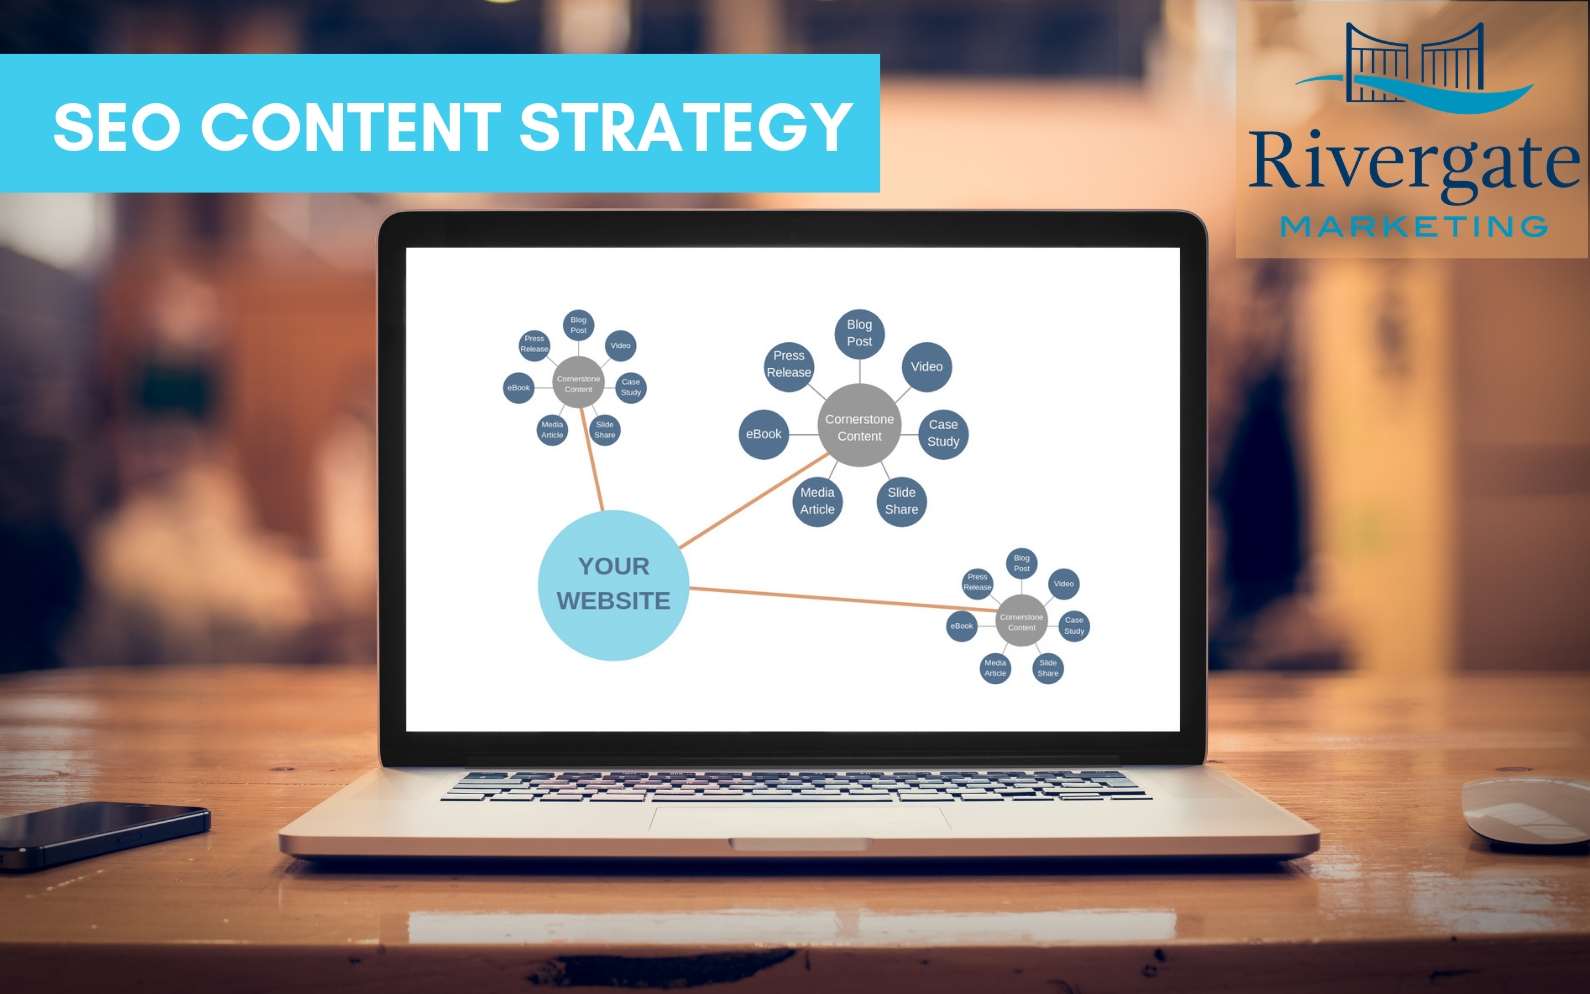 Rivergate Marketing SEO cornerstone content graphic in a laptop screen with Rivergate marketing logo